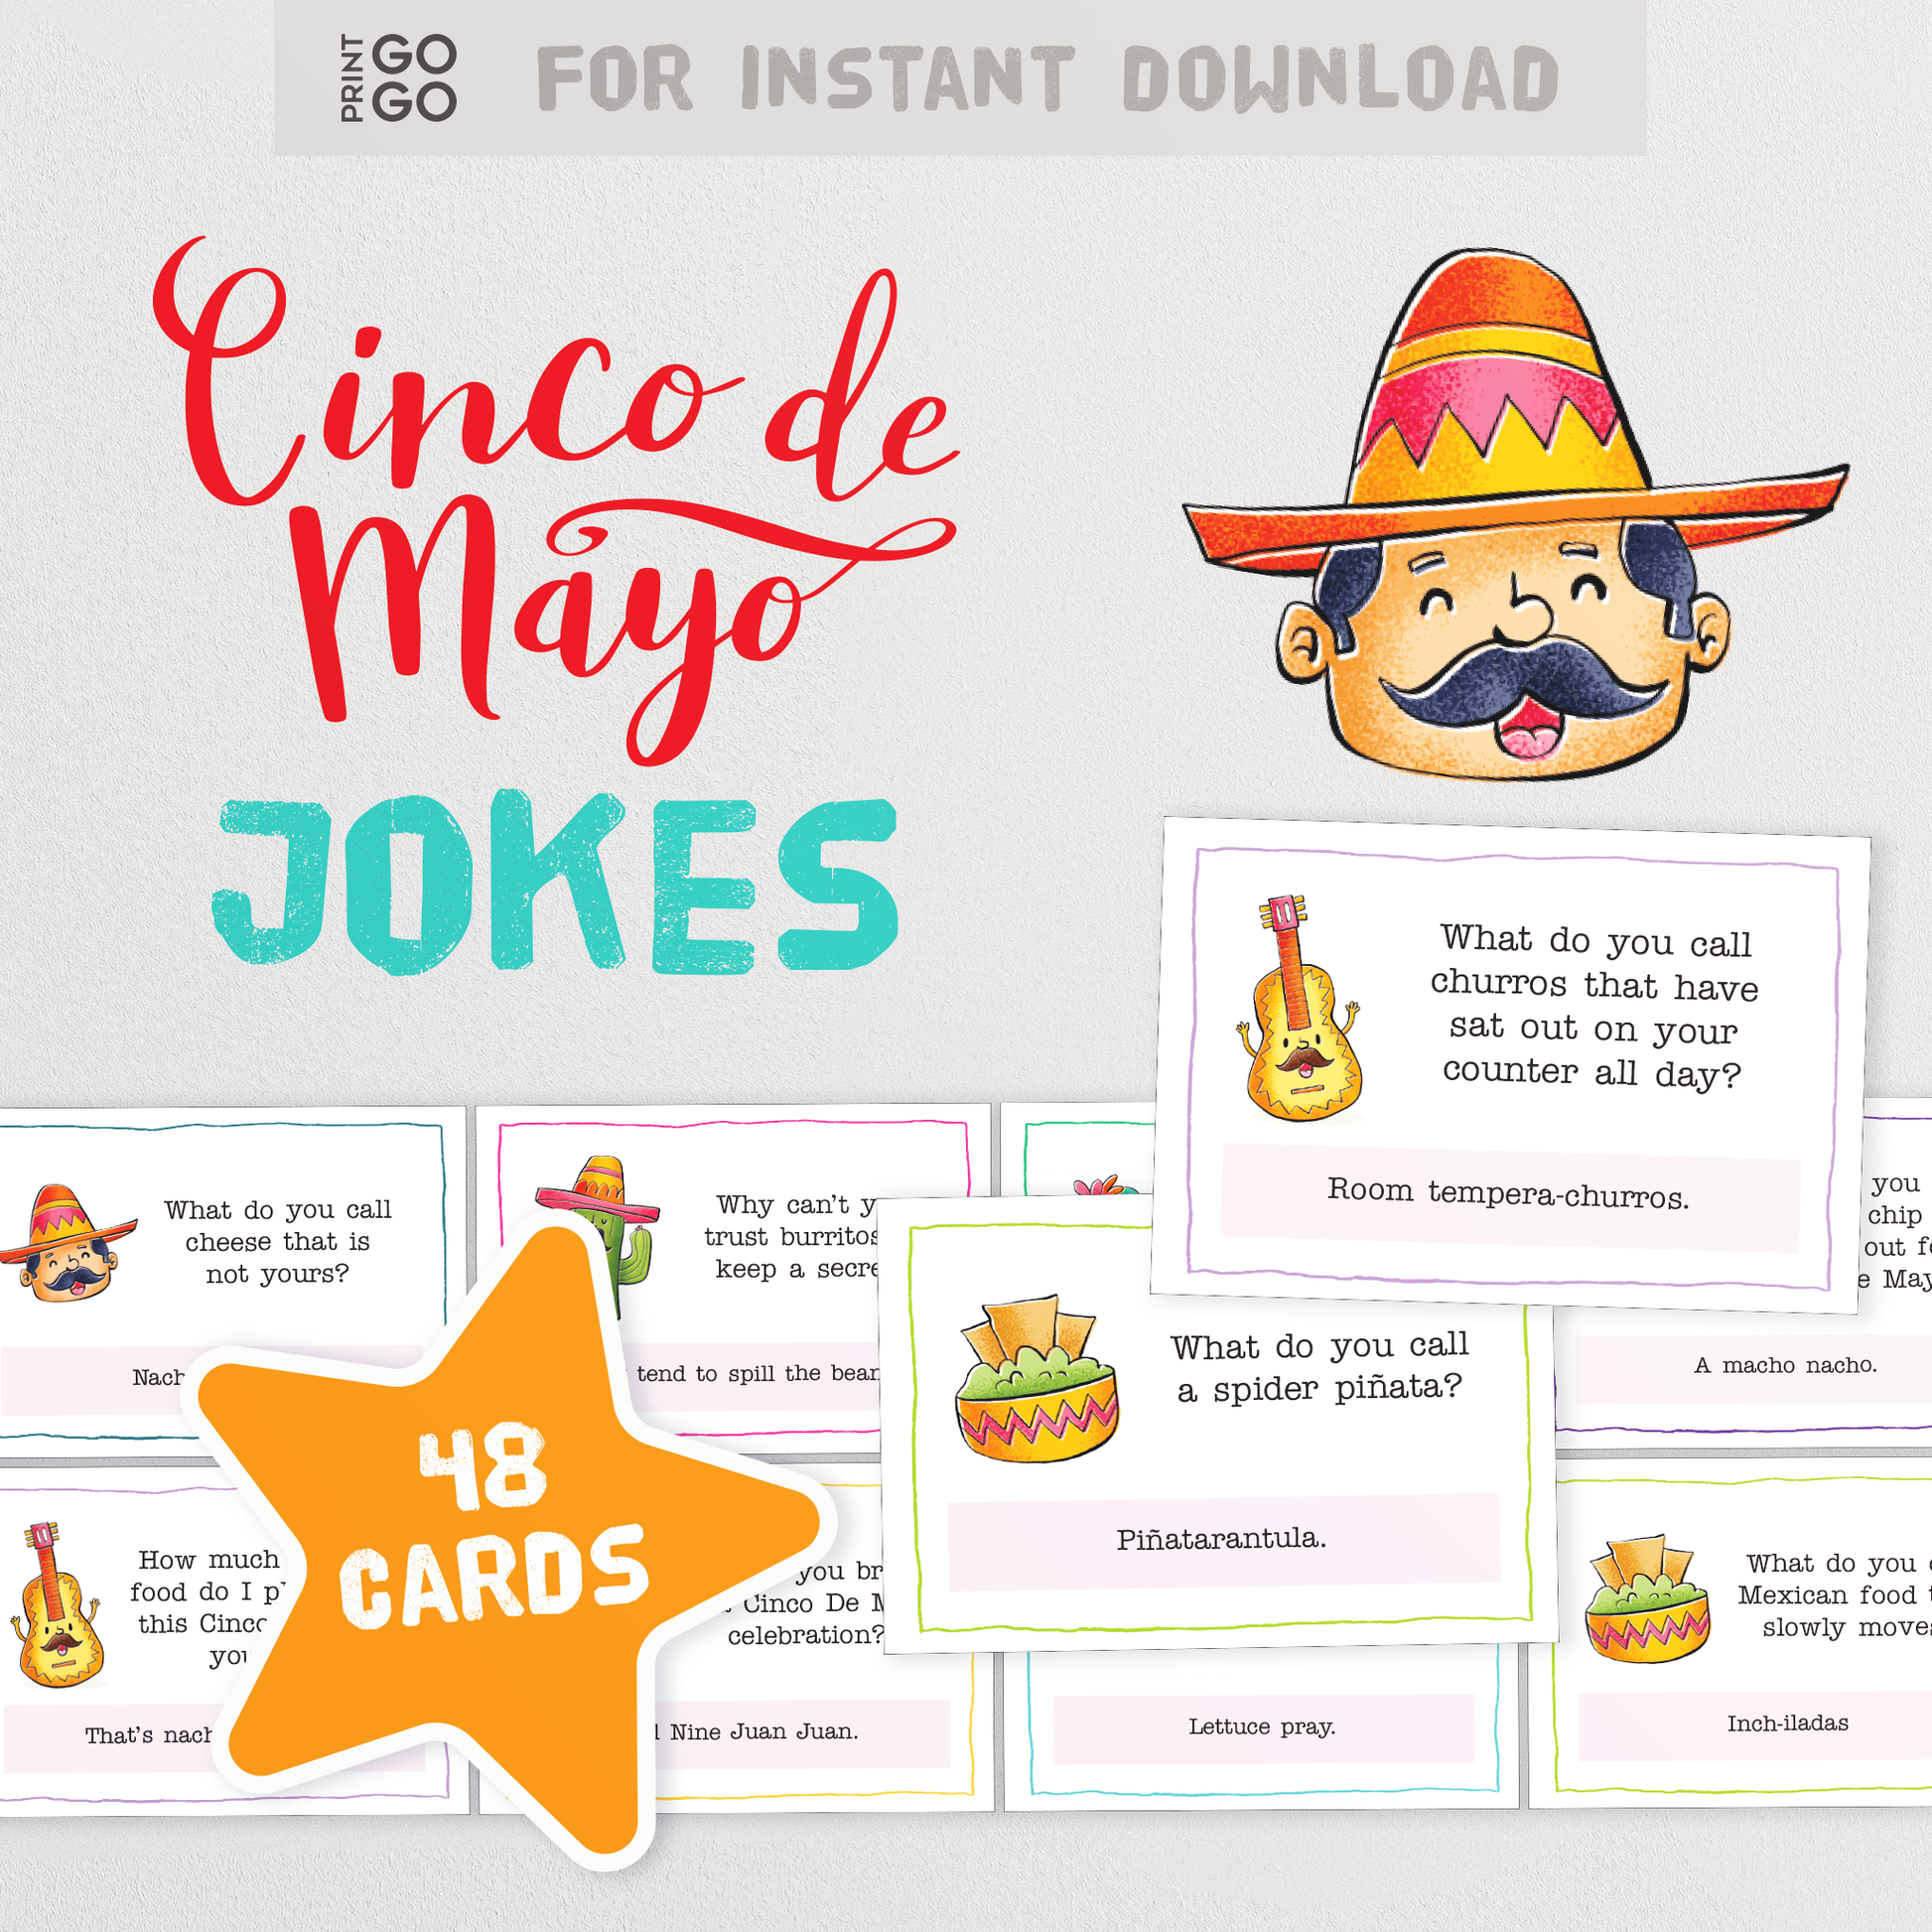 Cinco de Mayo Jokes - Family Friendly Jokes to Make You Laugh and Groan